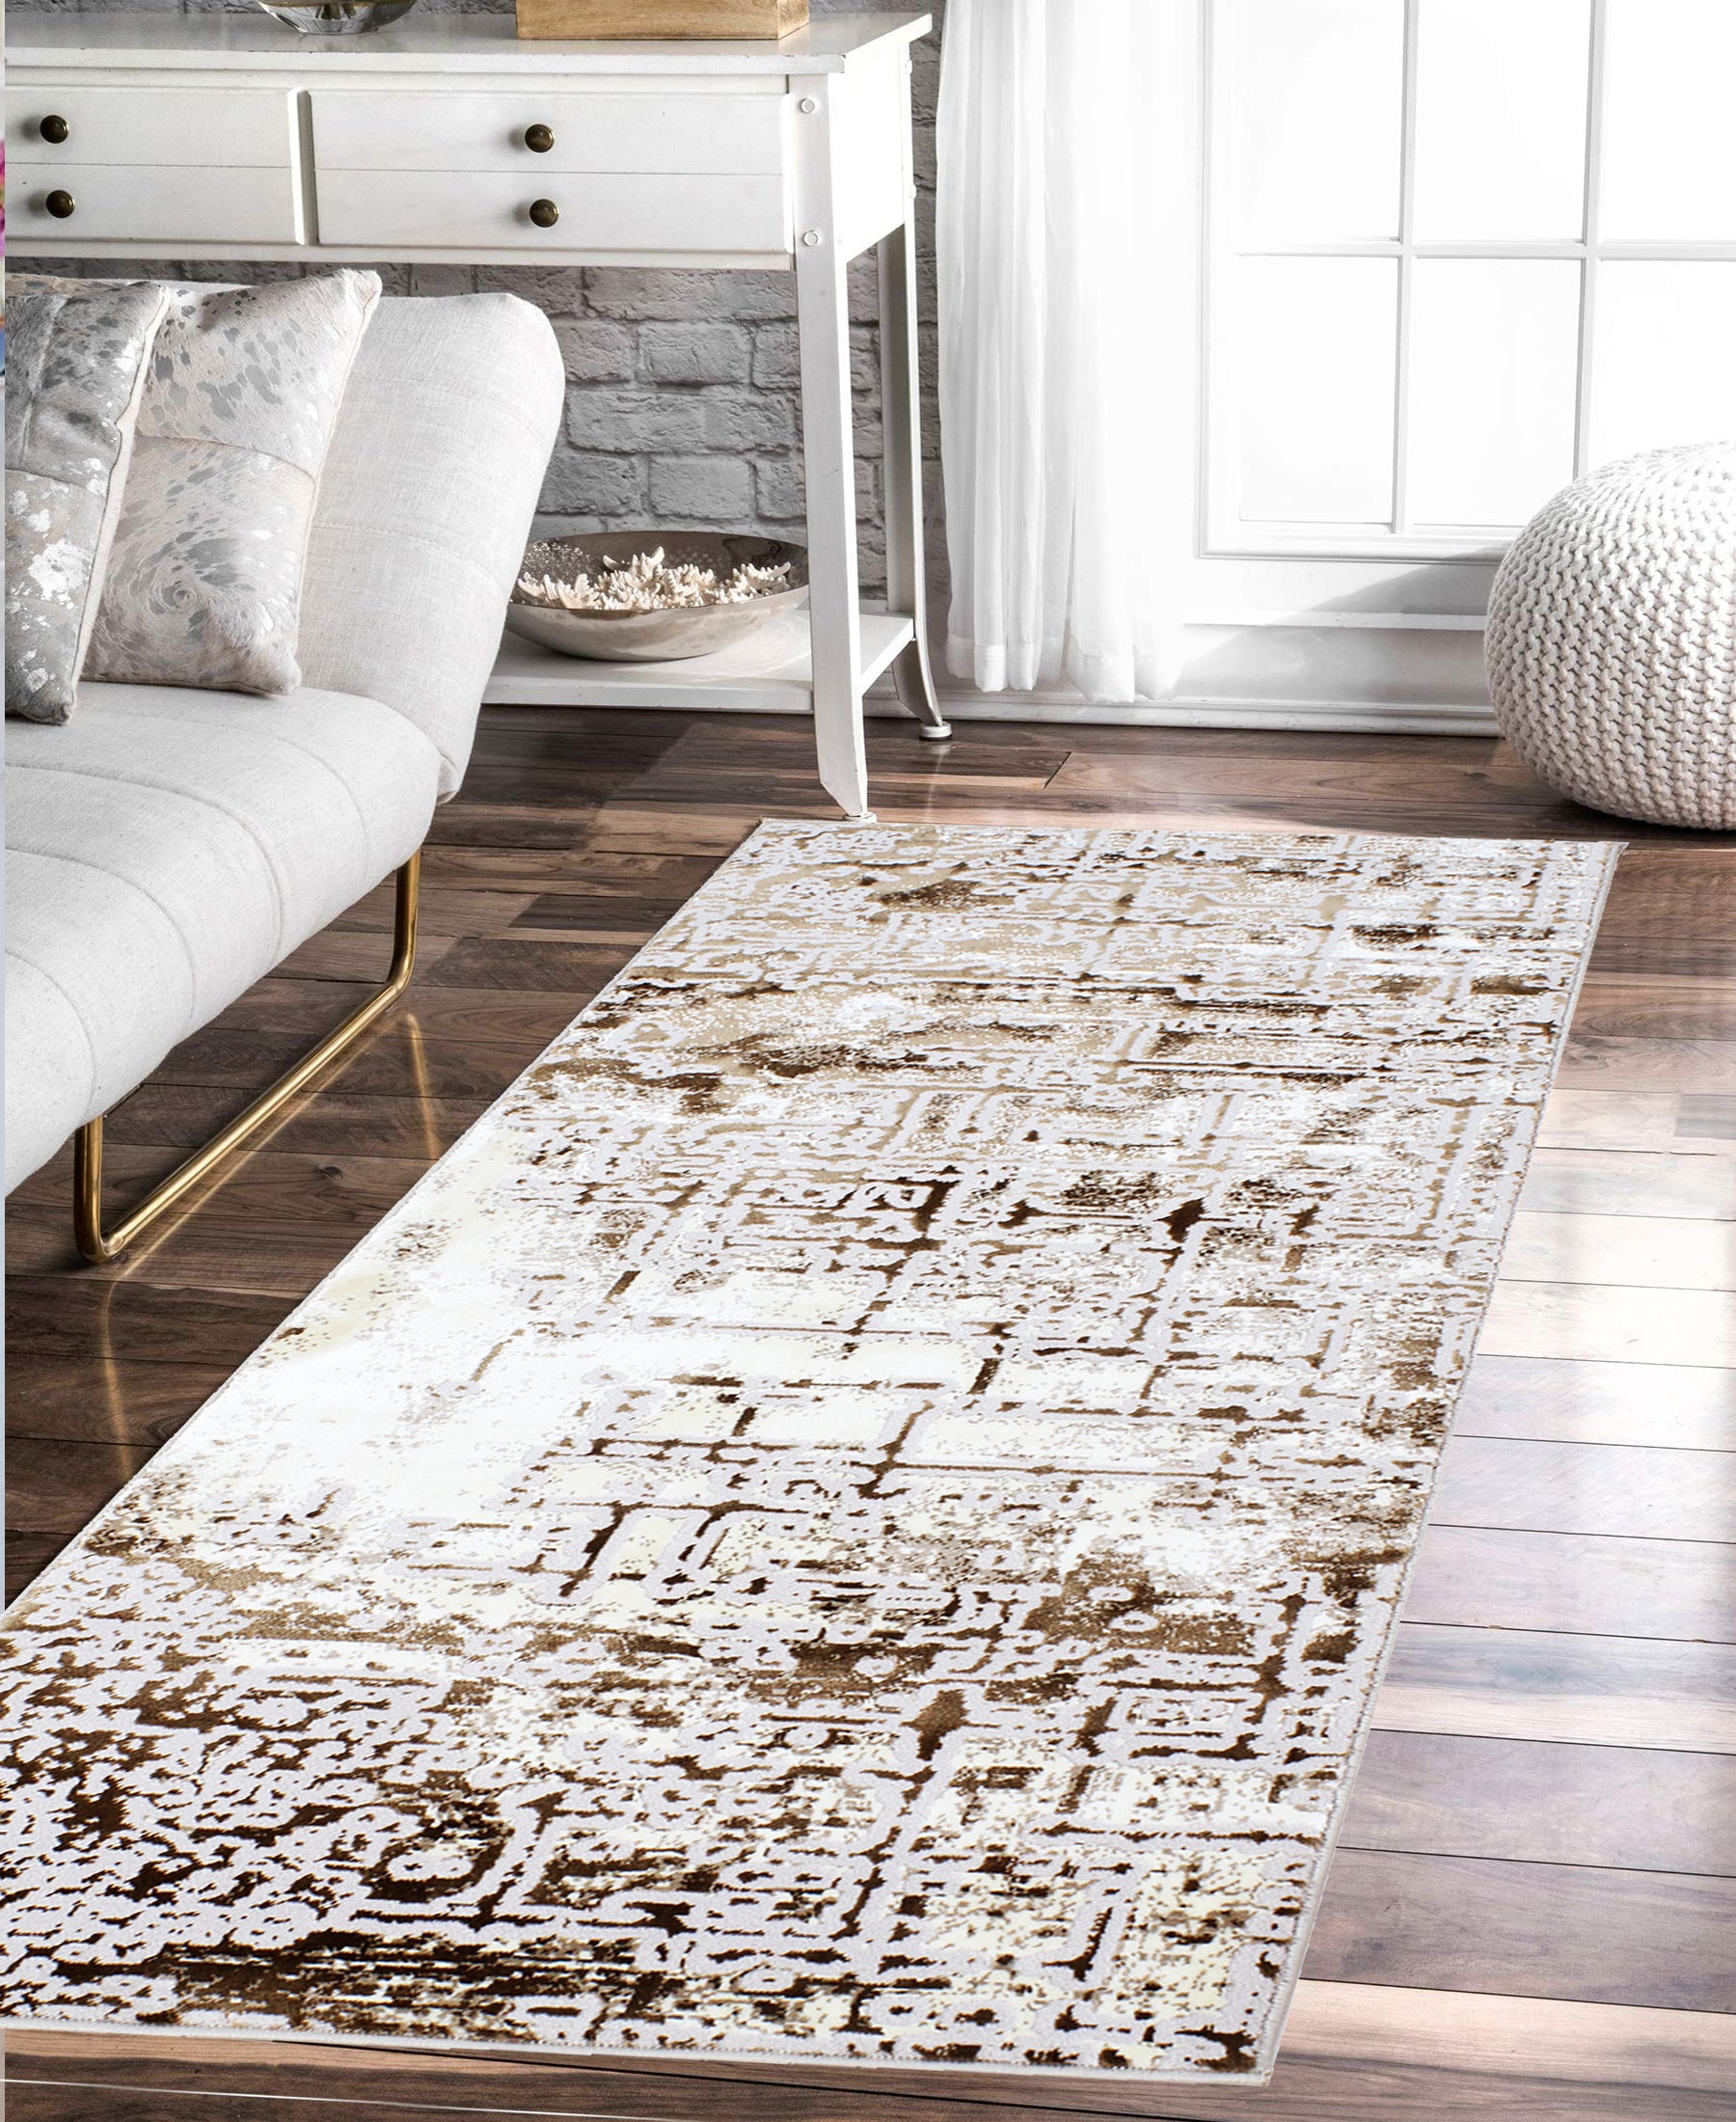 Damascus Willow Carpet 800mm x 2000mm - Beige & White